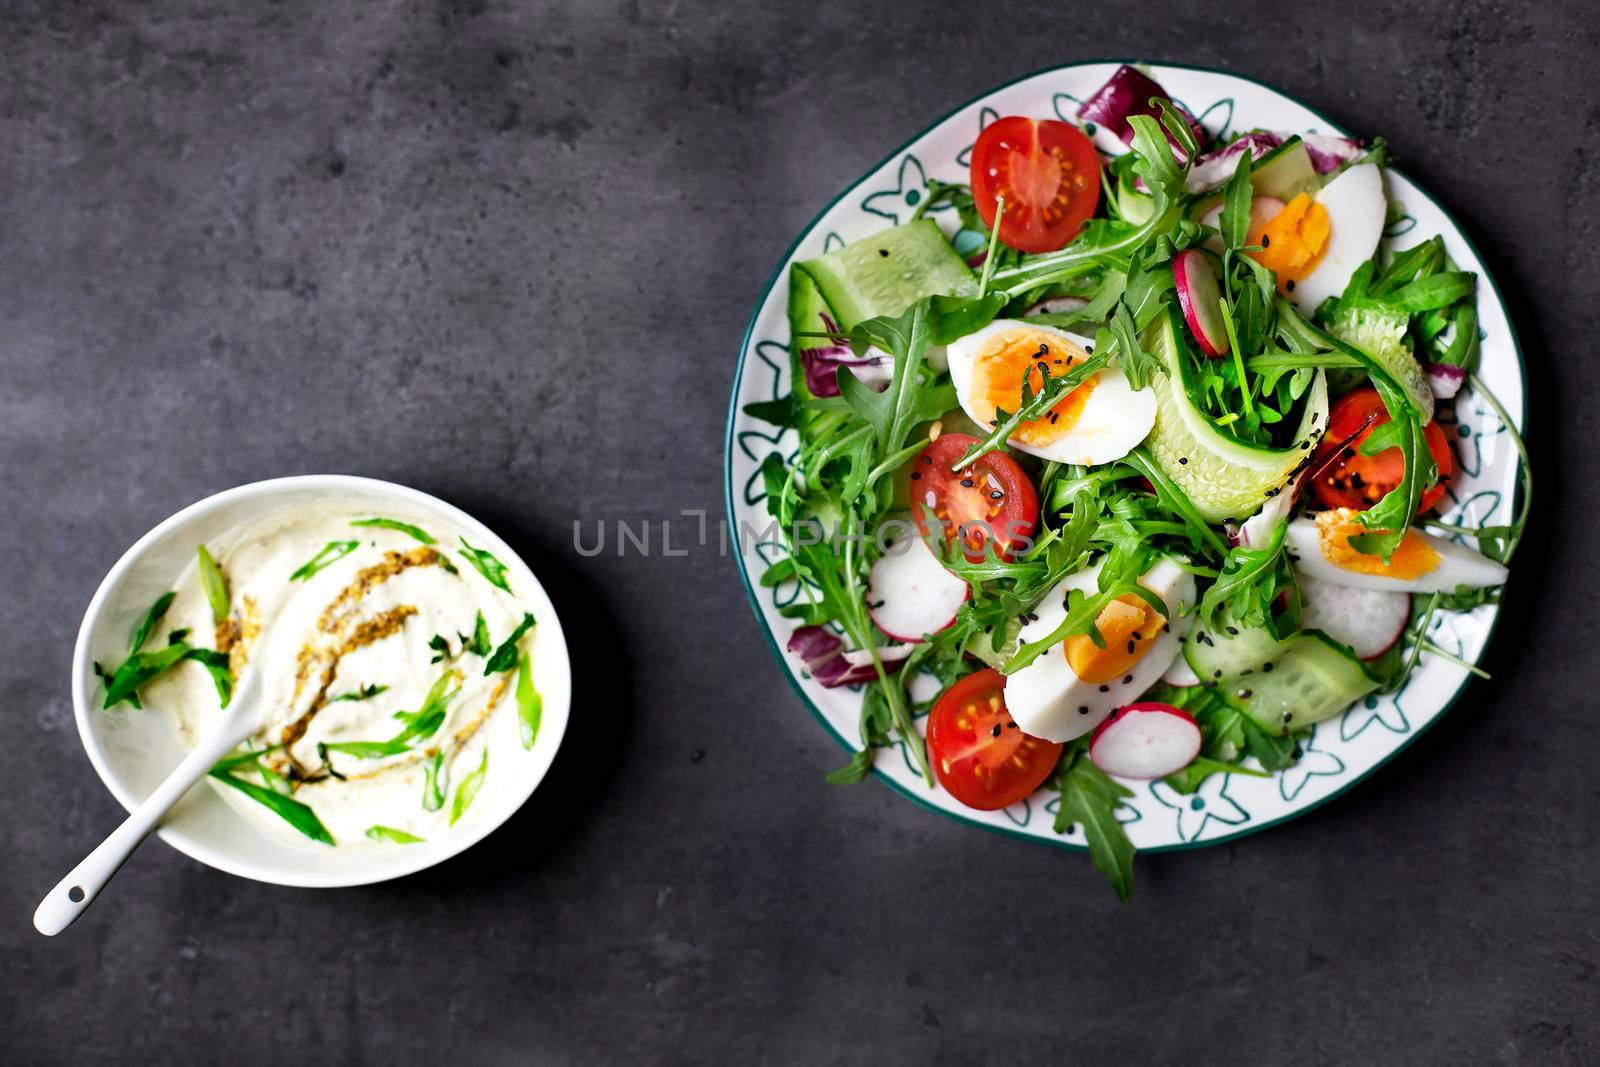 Greek salad in red boul by Jyliana